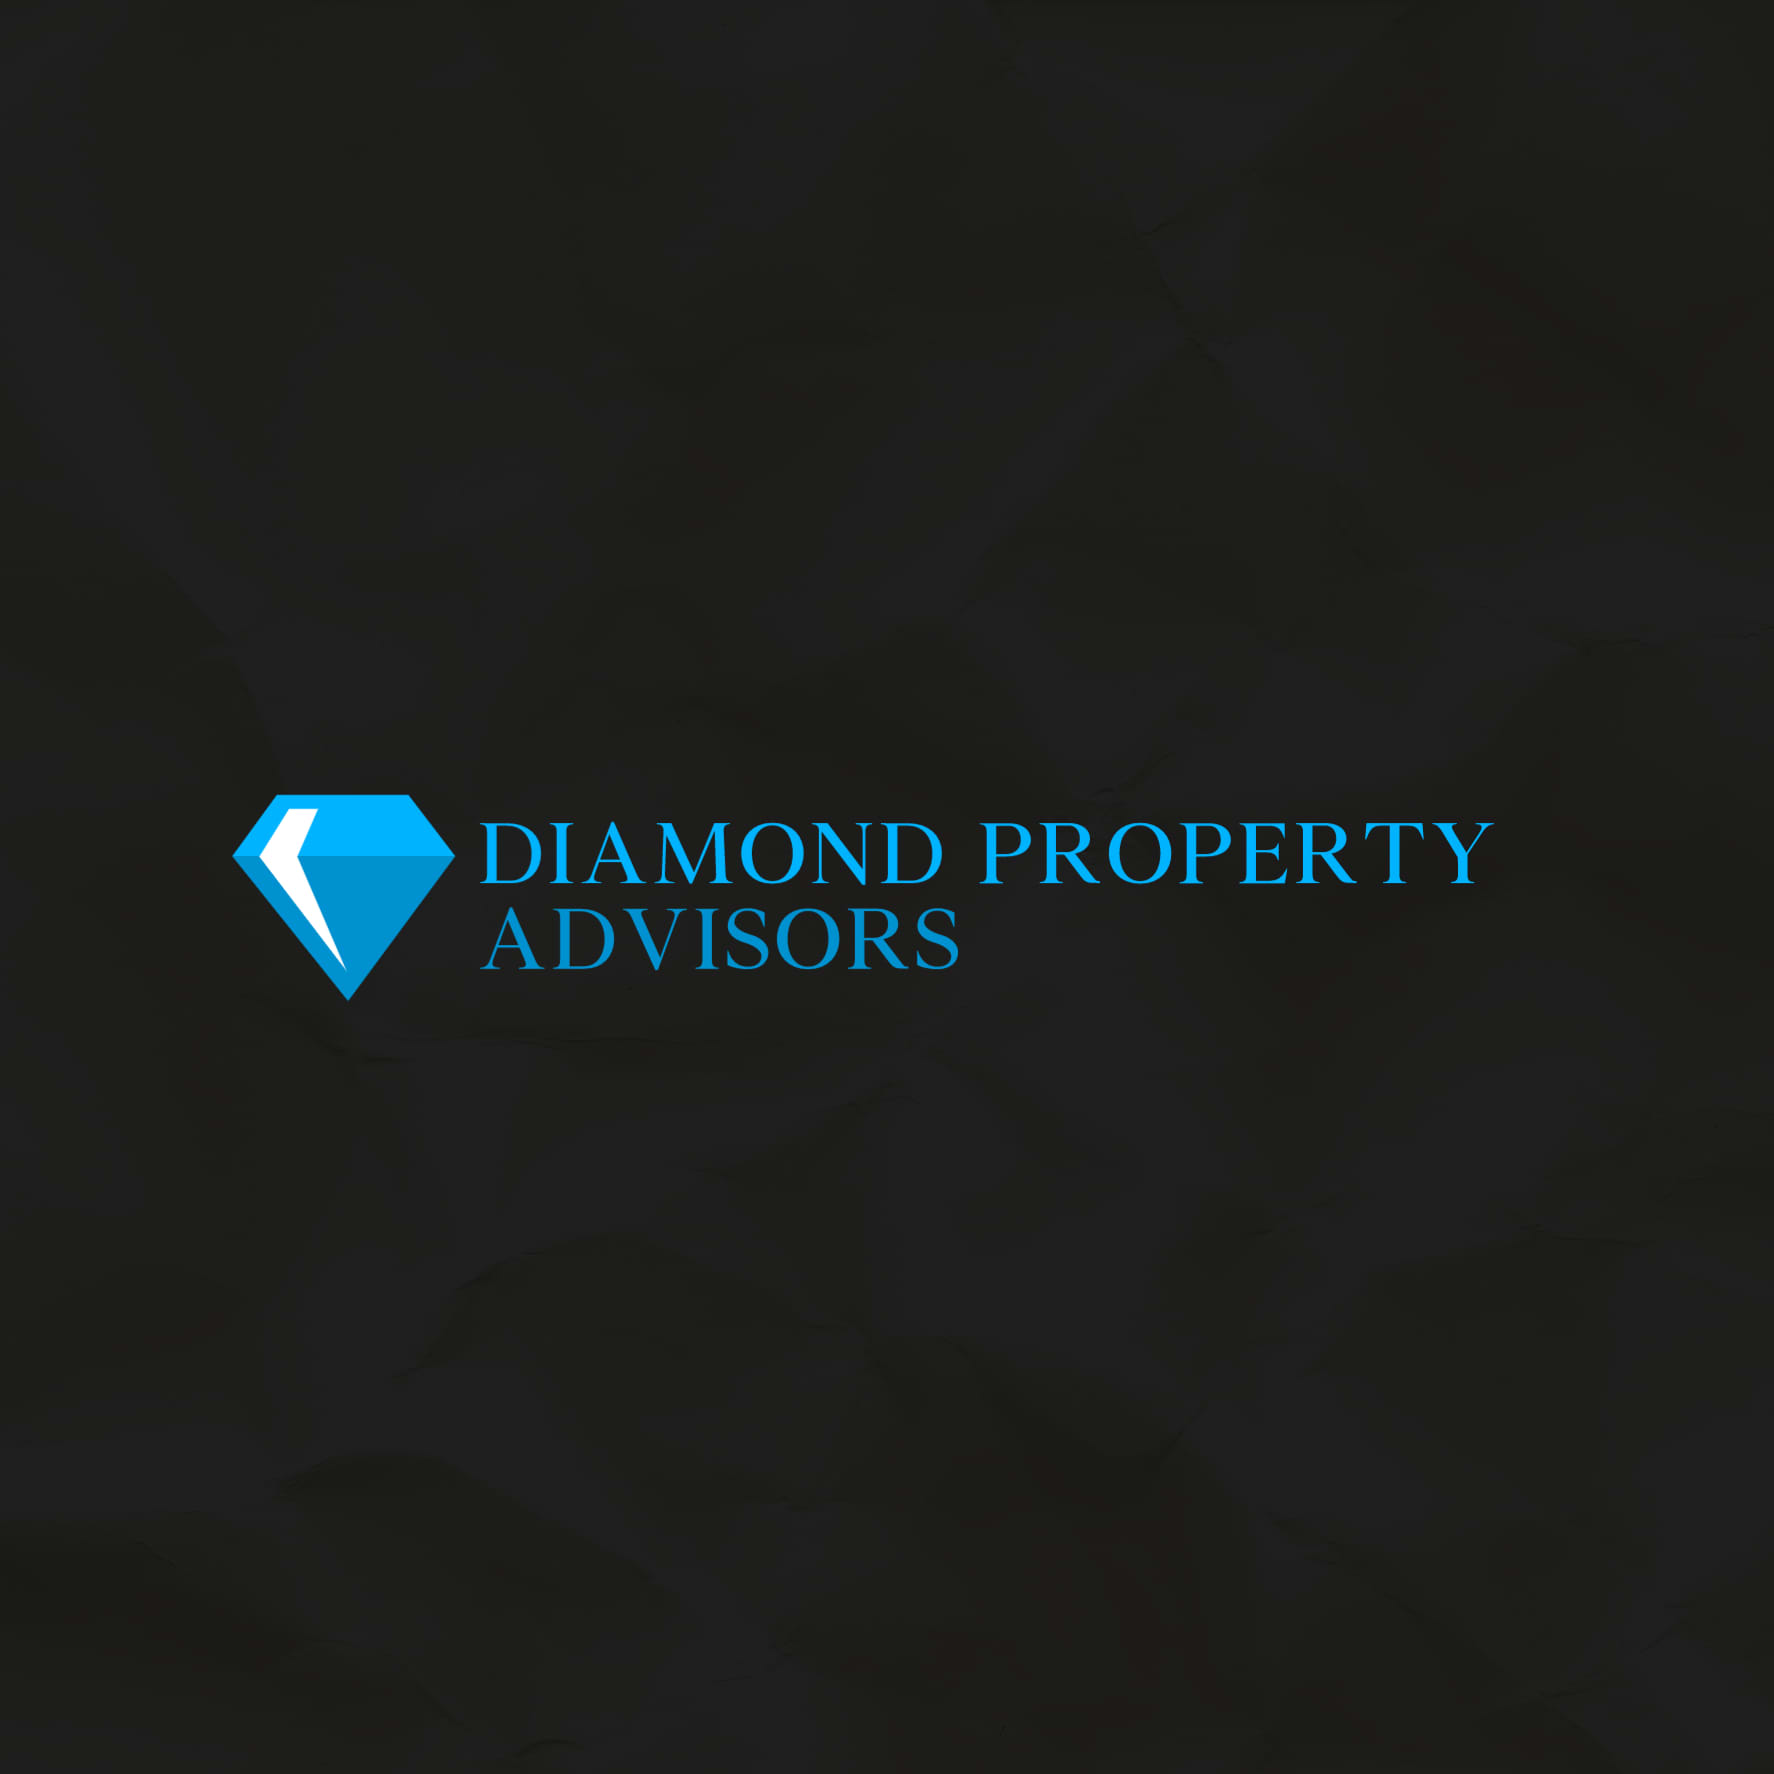 Diamond Property Advisors